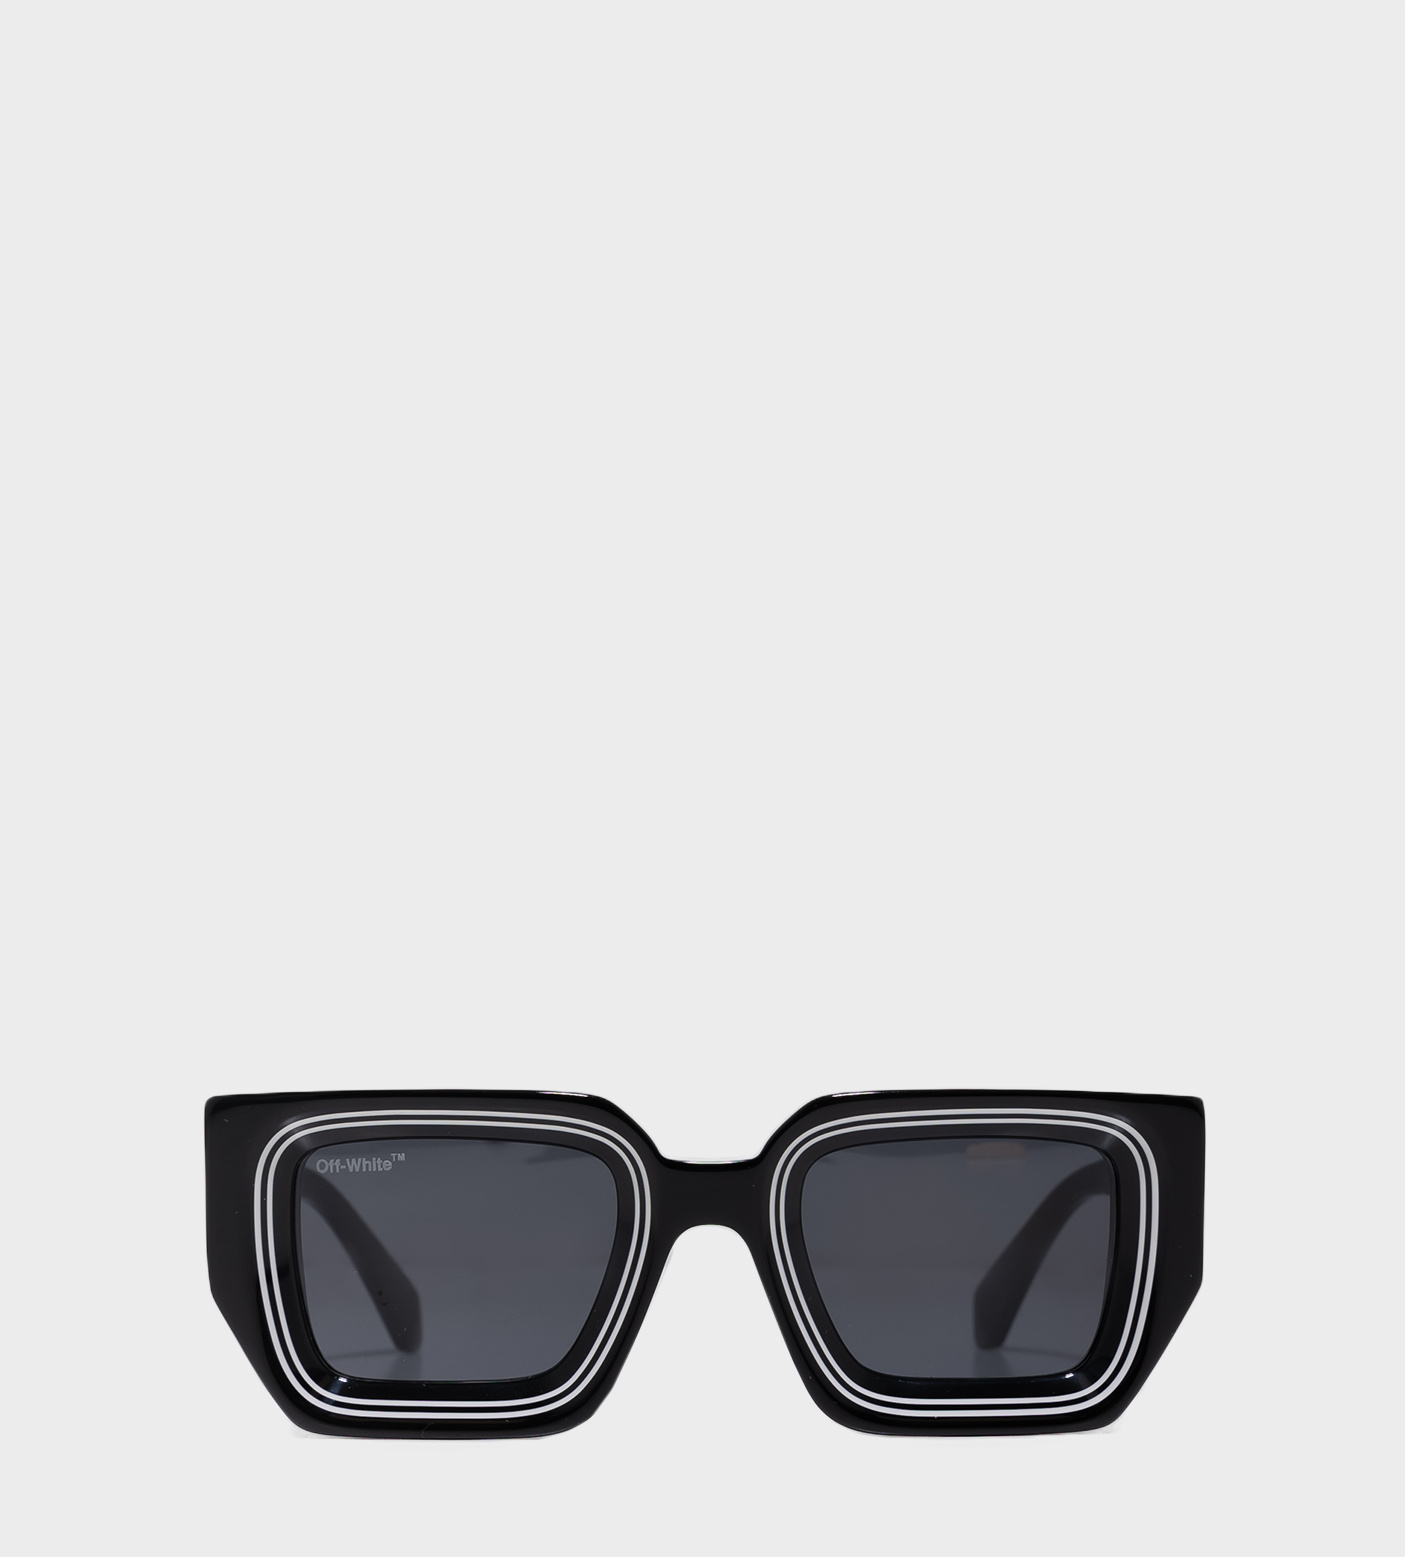 OFF-WHITE Francisco Sunglasses Black